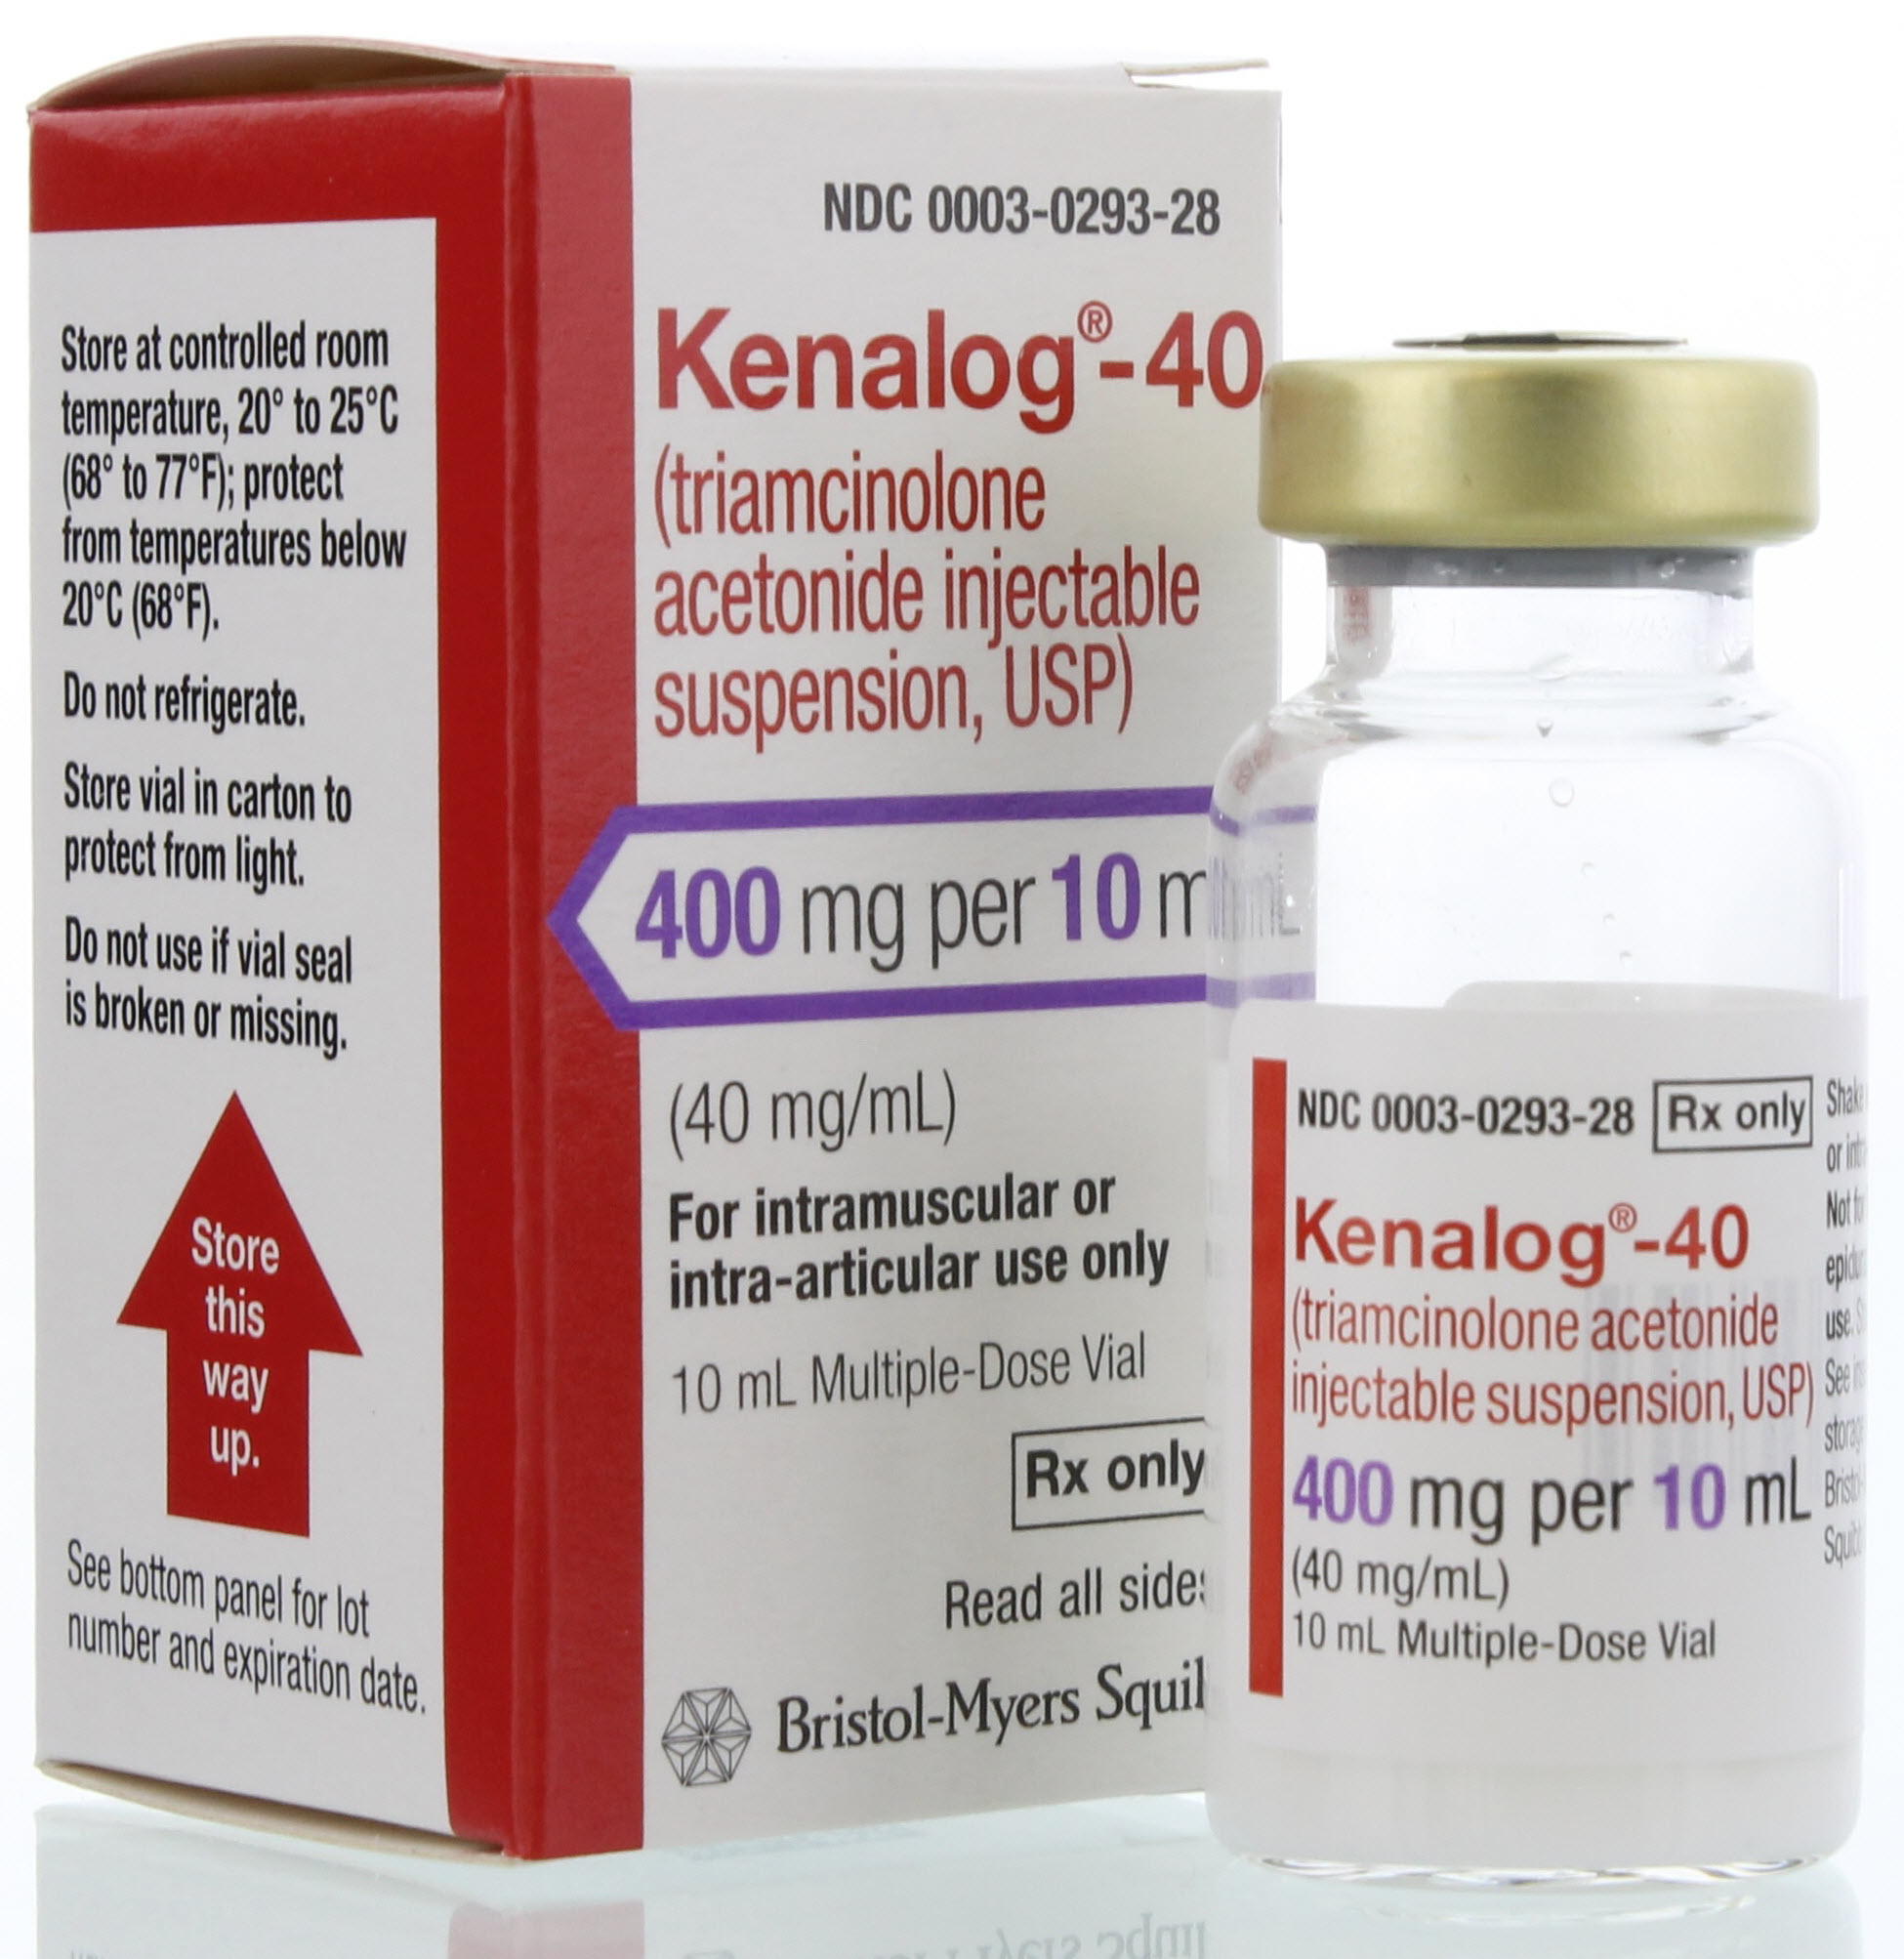 Kenalog®-40 Injection